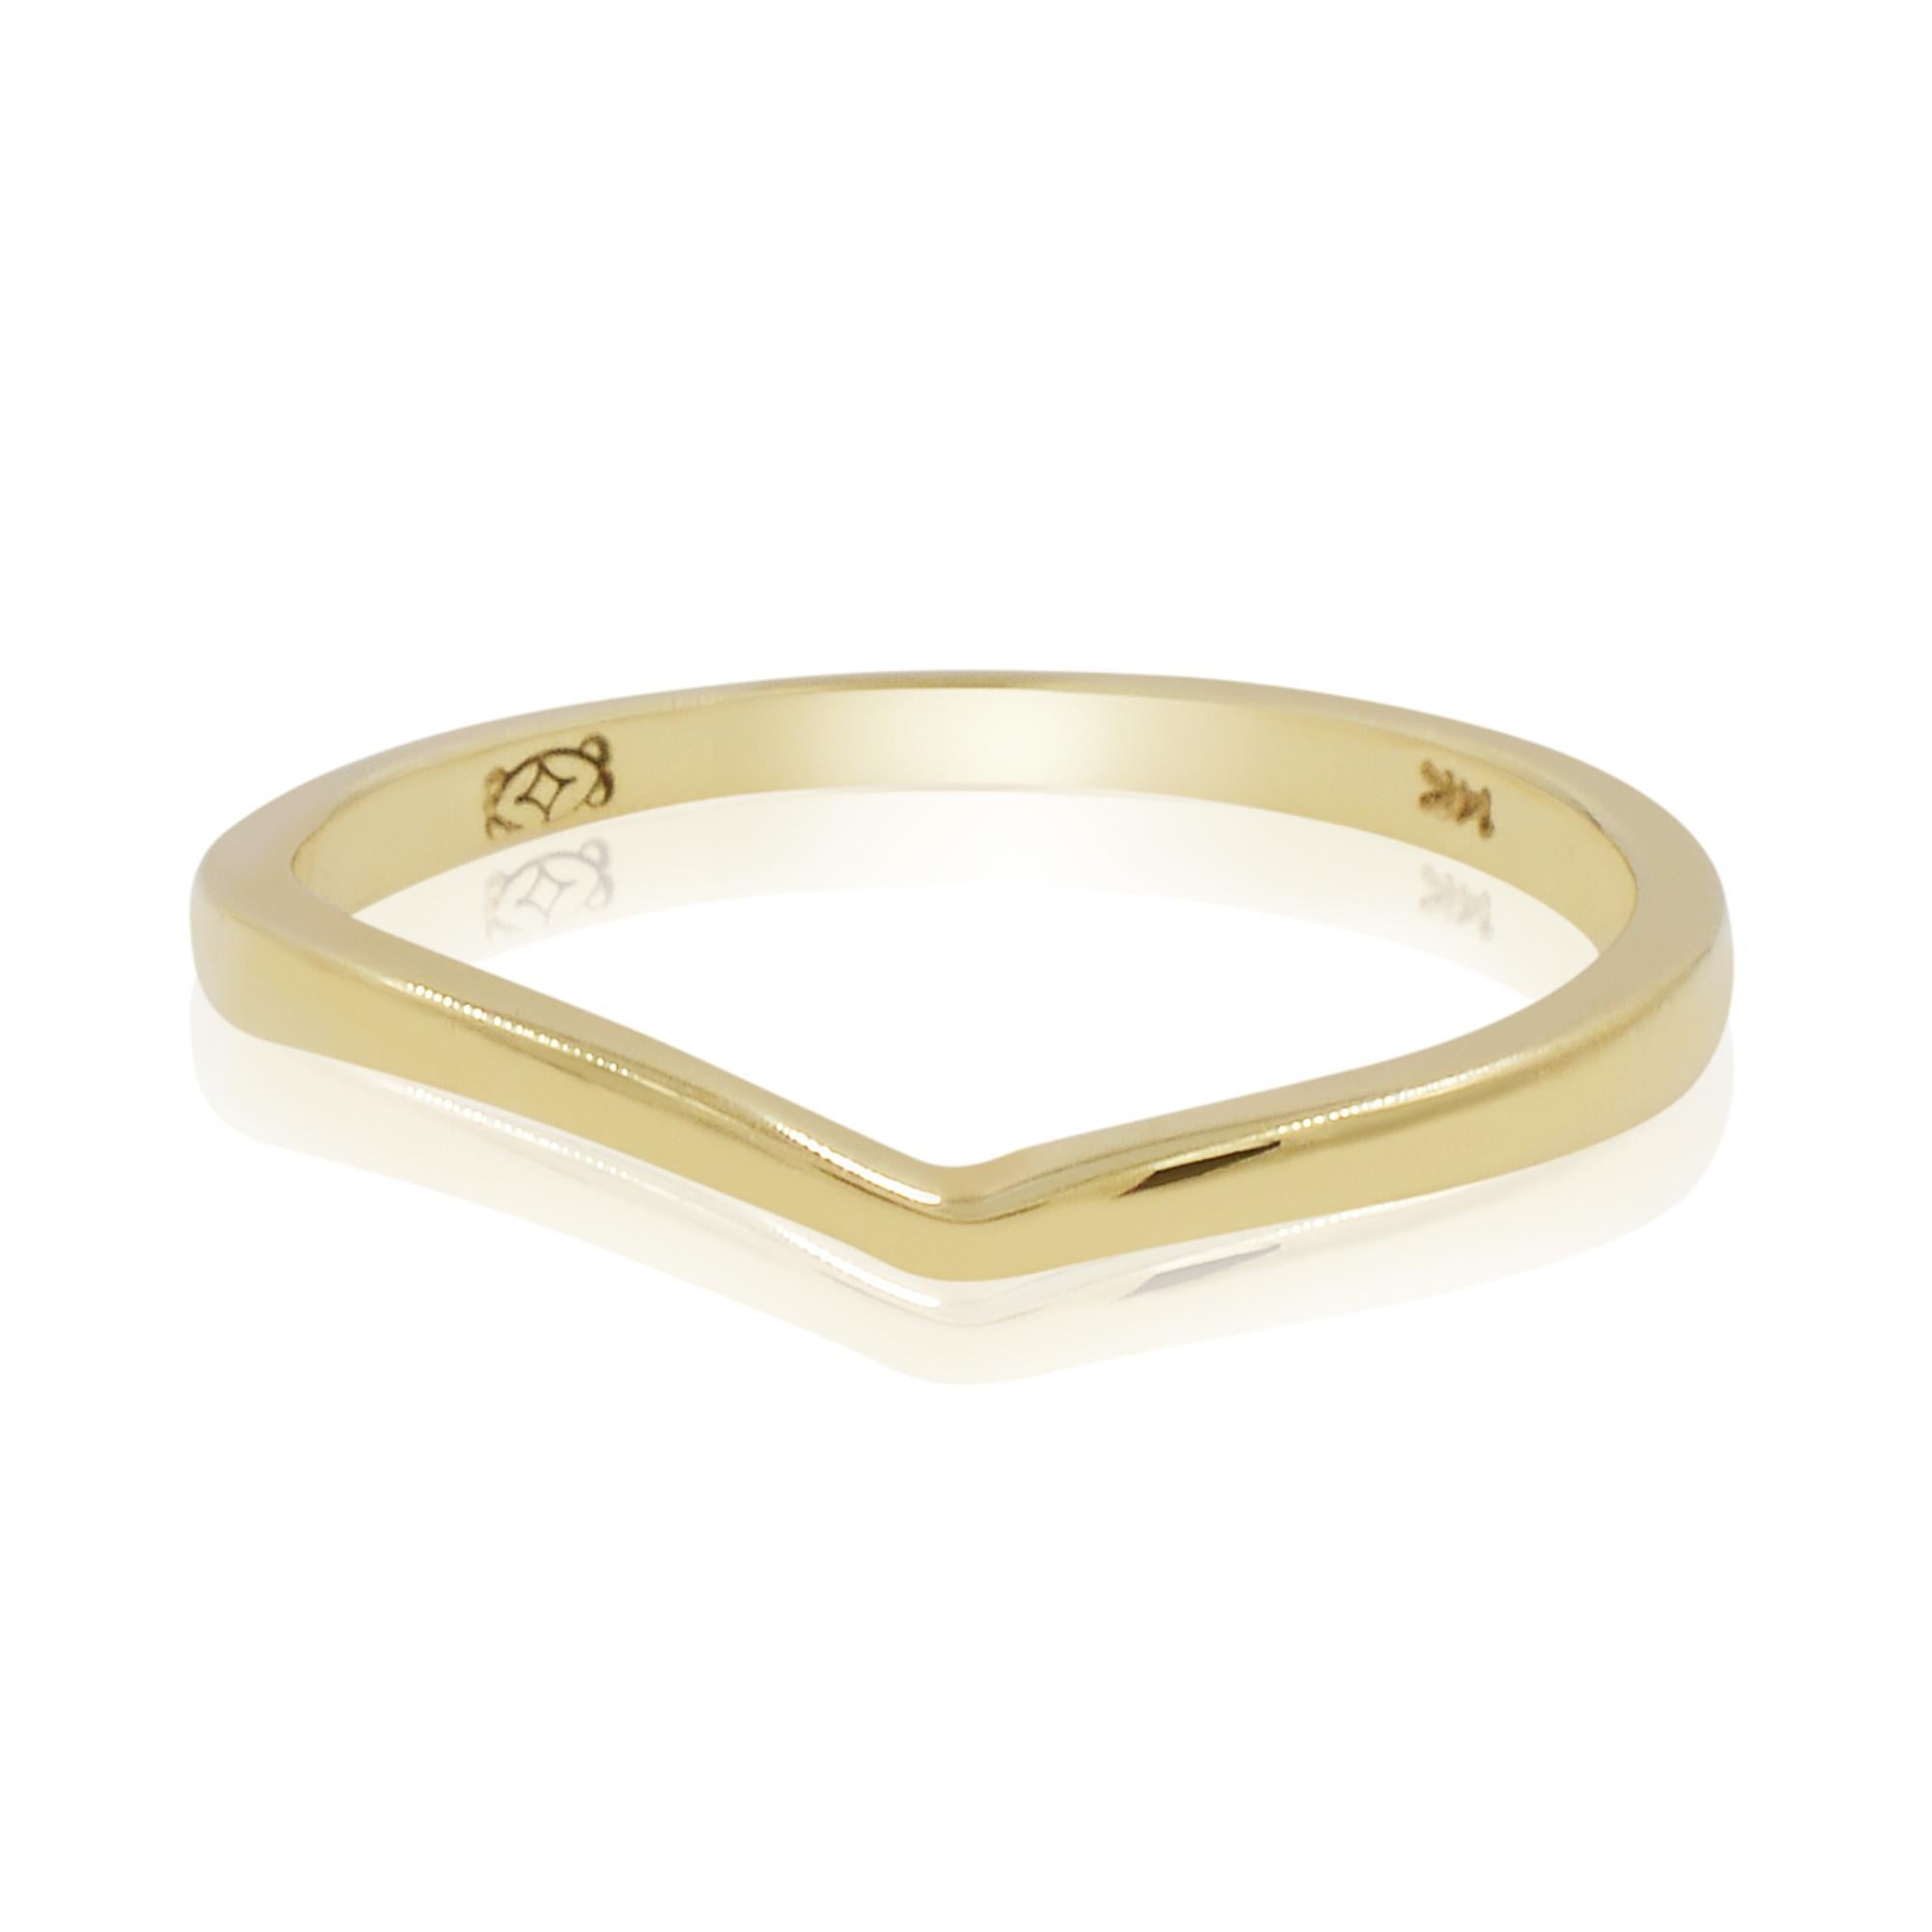 Rachel Koen Marquise Cut Diamond Engagement Ring Set 14K Yellow Gold 1.05Cttw For Sale 3